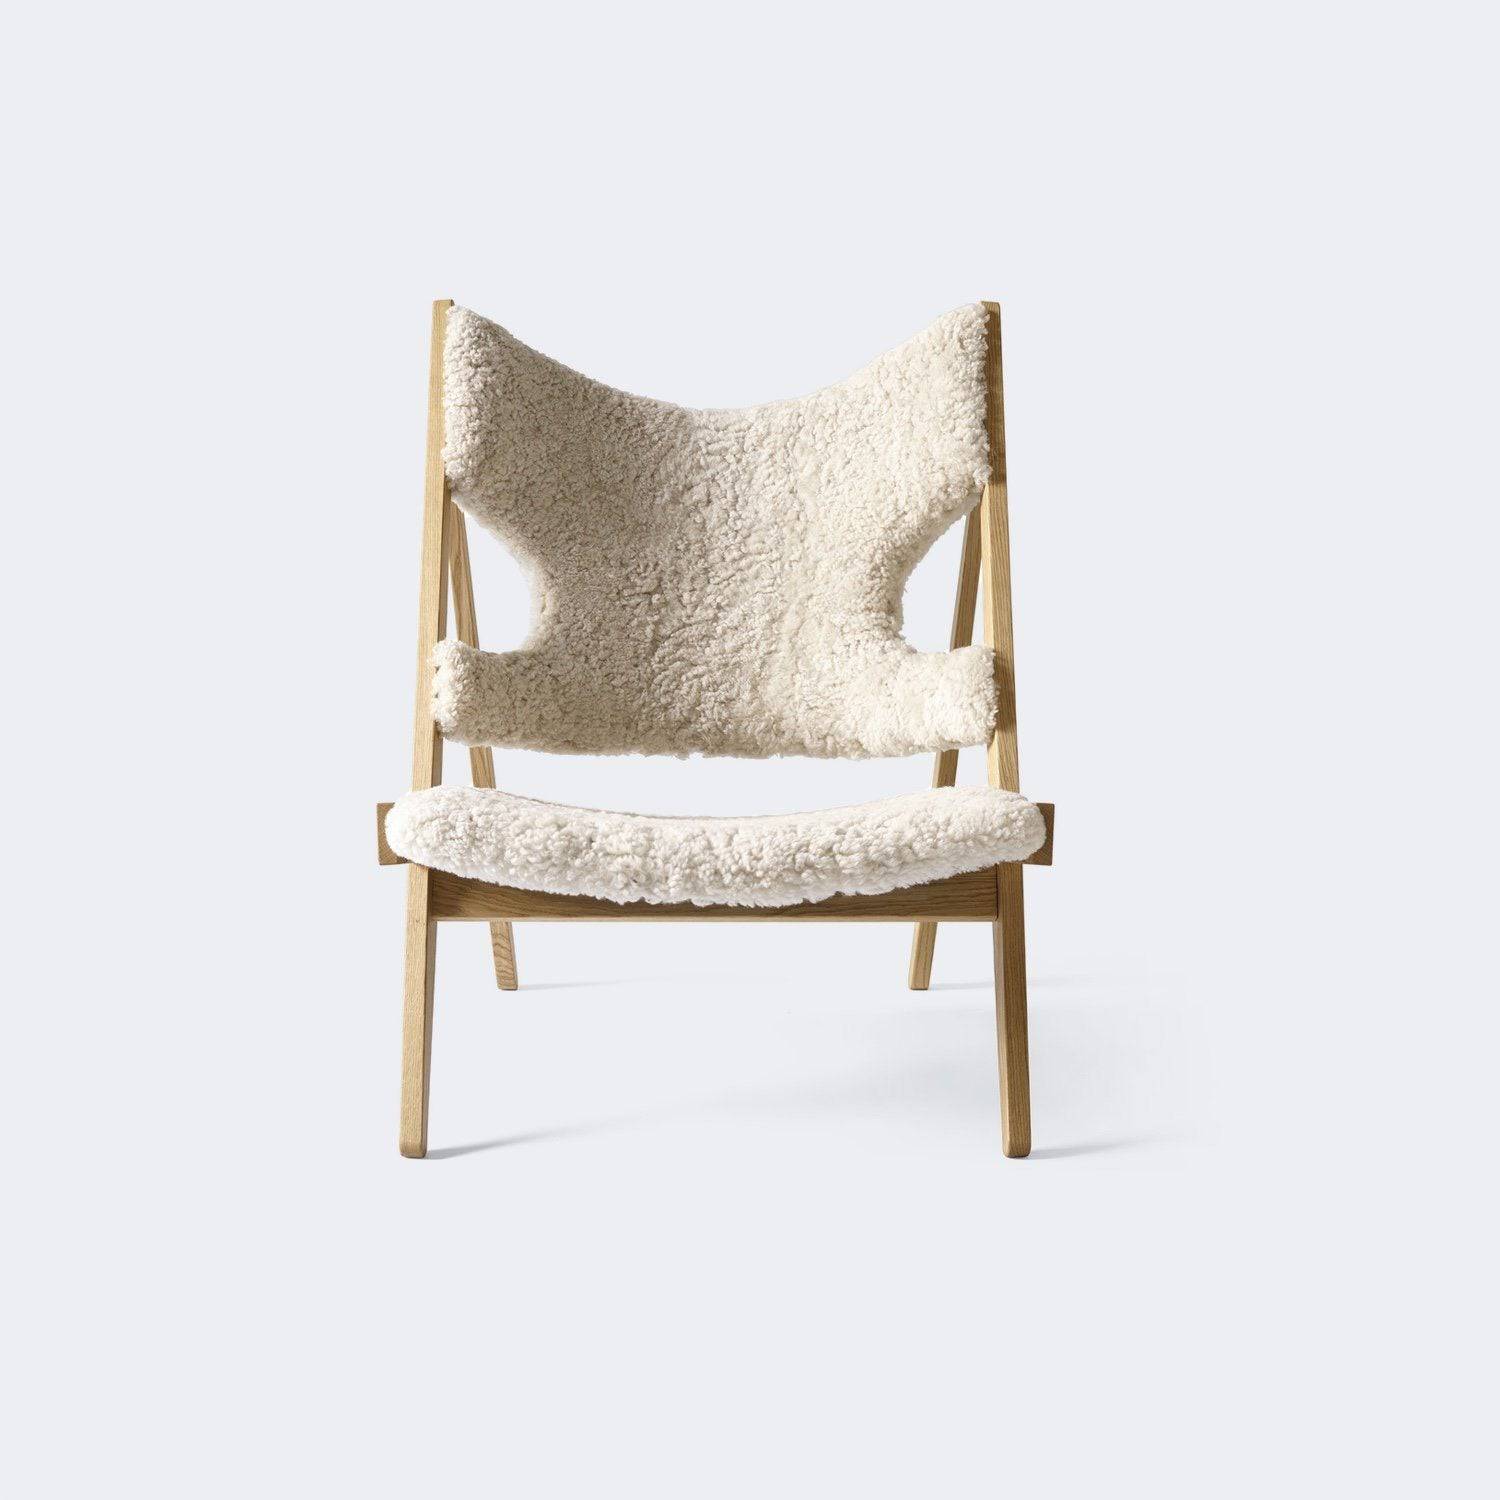 Audo Copenhagen Knitting Chair, Sheepskin Upholstery Made To Order Natural Oak/Nature - KANSO#Frame/Fabric Color_Natural Oak/Nature